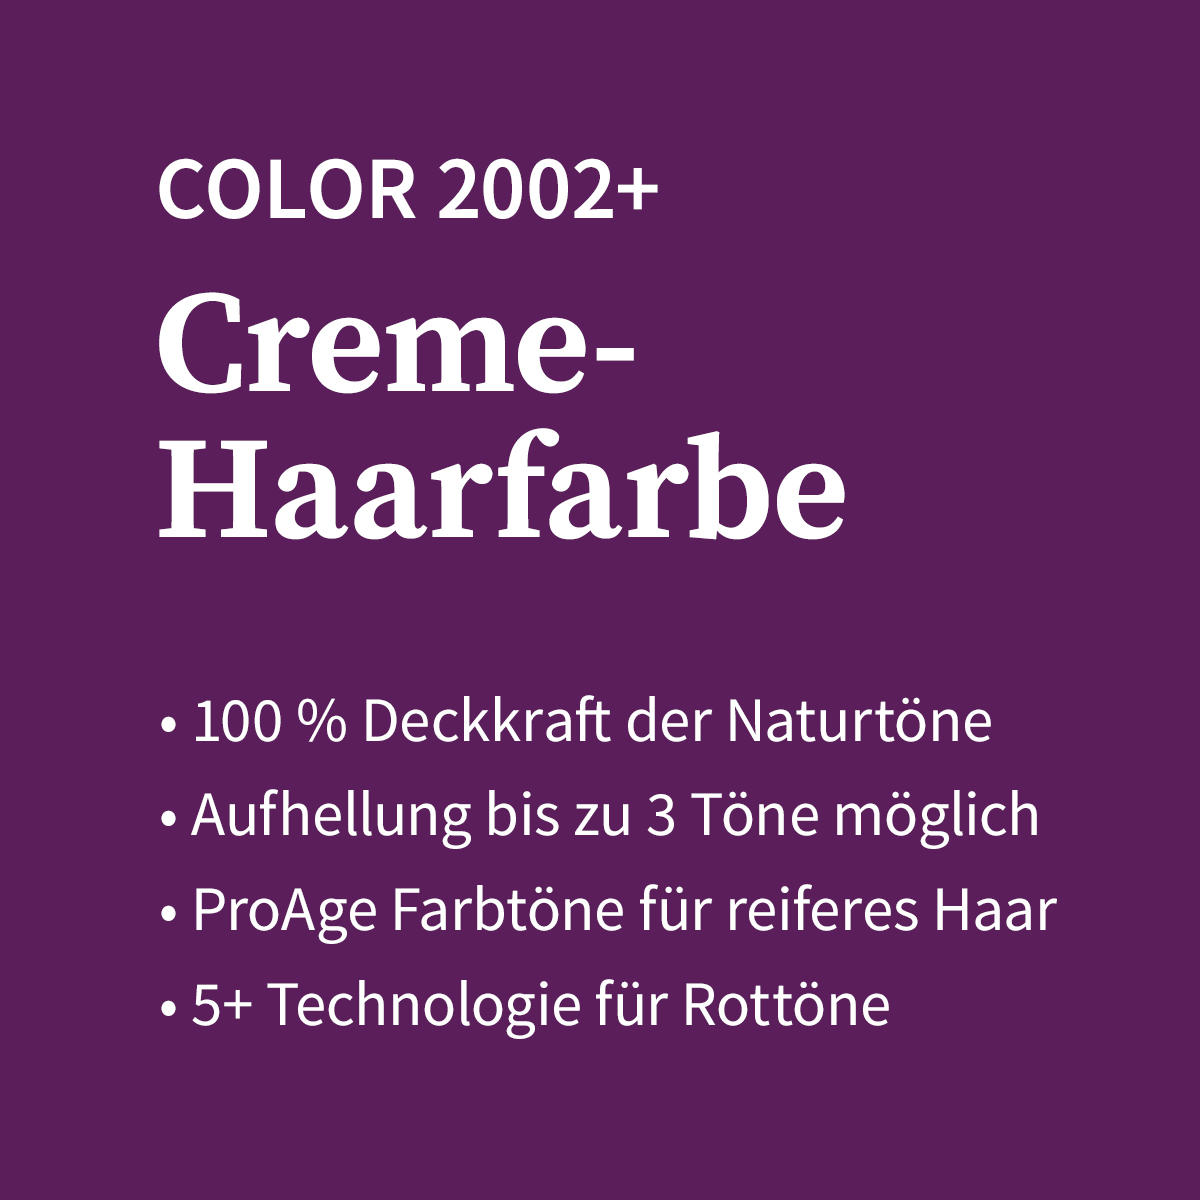 Basler Color 2002+ Cremehaarfarbe 7/1 mittelblond asch, Tube 60 ml - 4